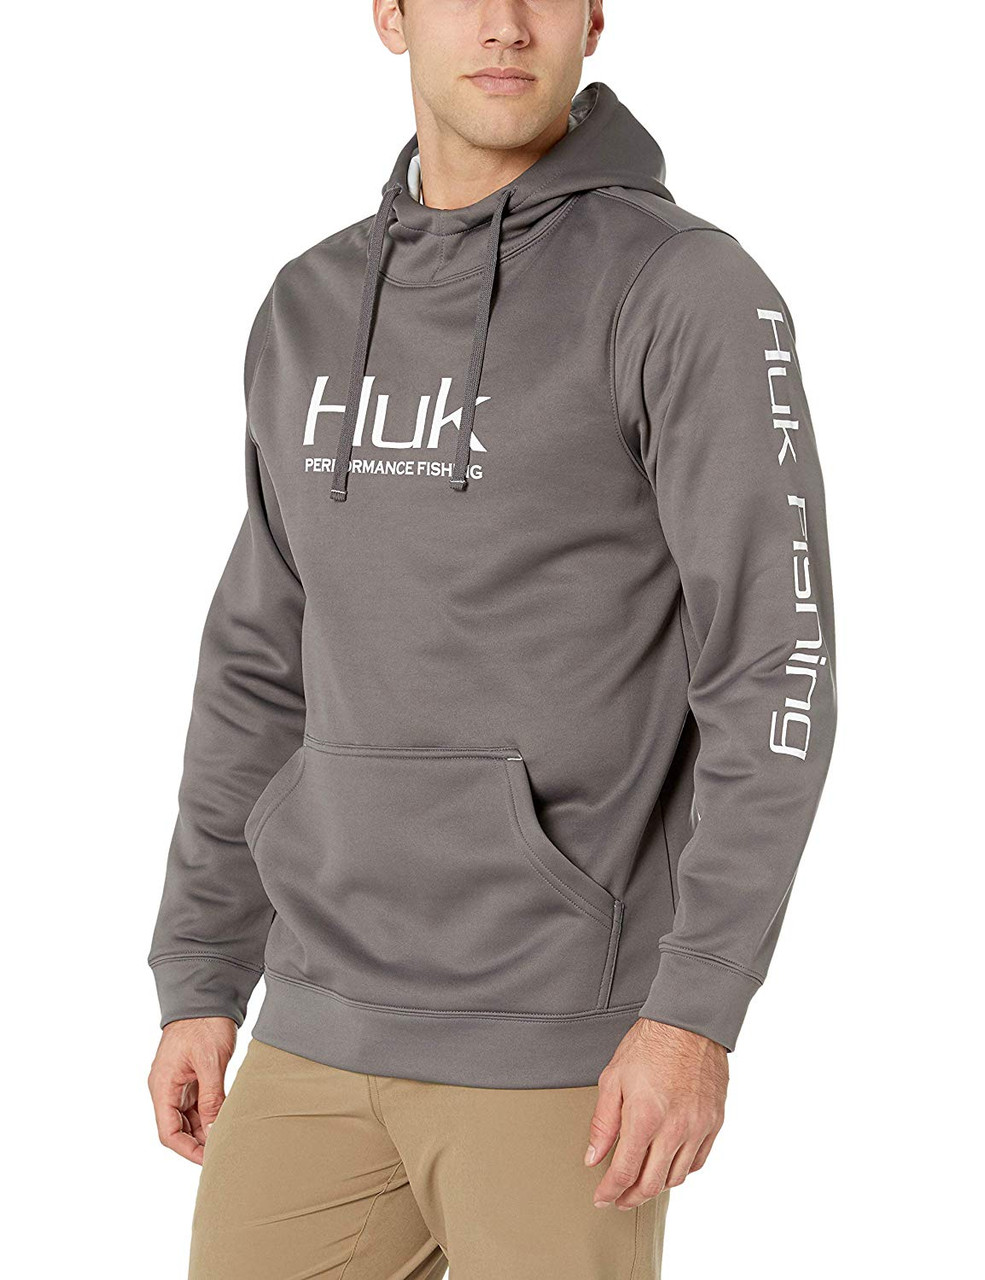 Huk Fishing Men's Performance Hoodie, Grey, Extra Large - H1300022-010-XL -  Hunting Stuff